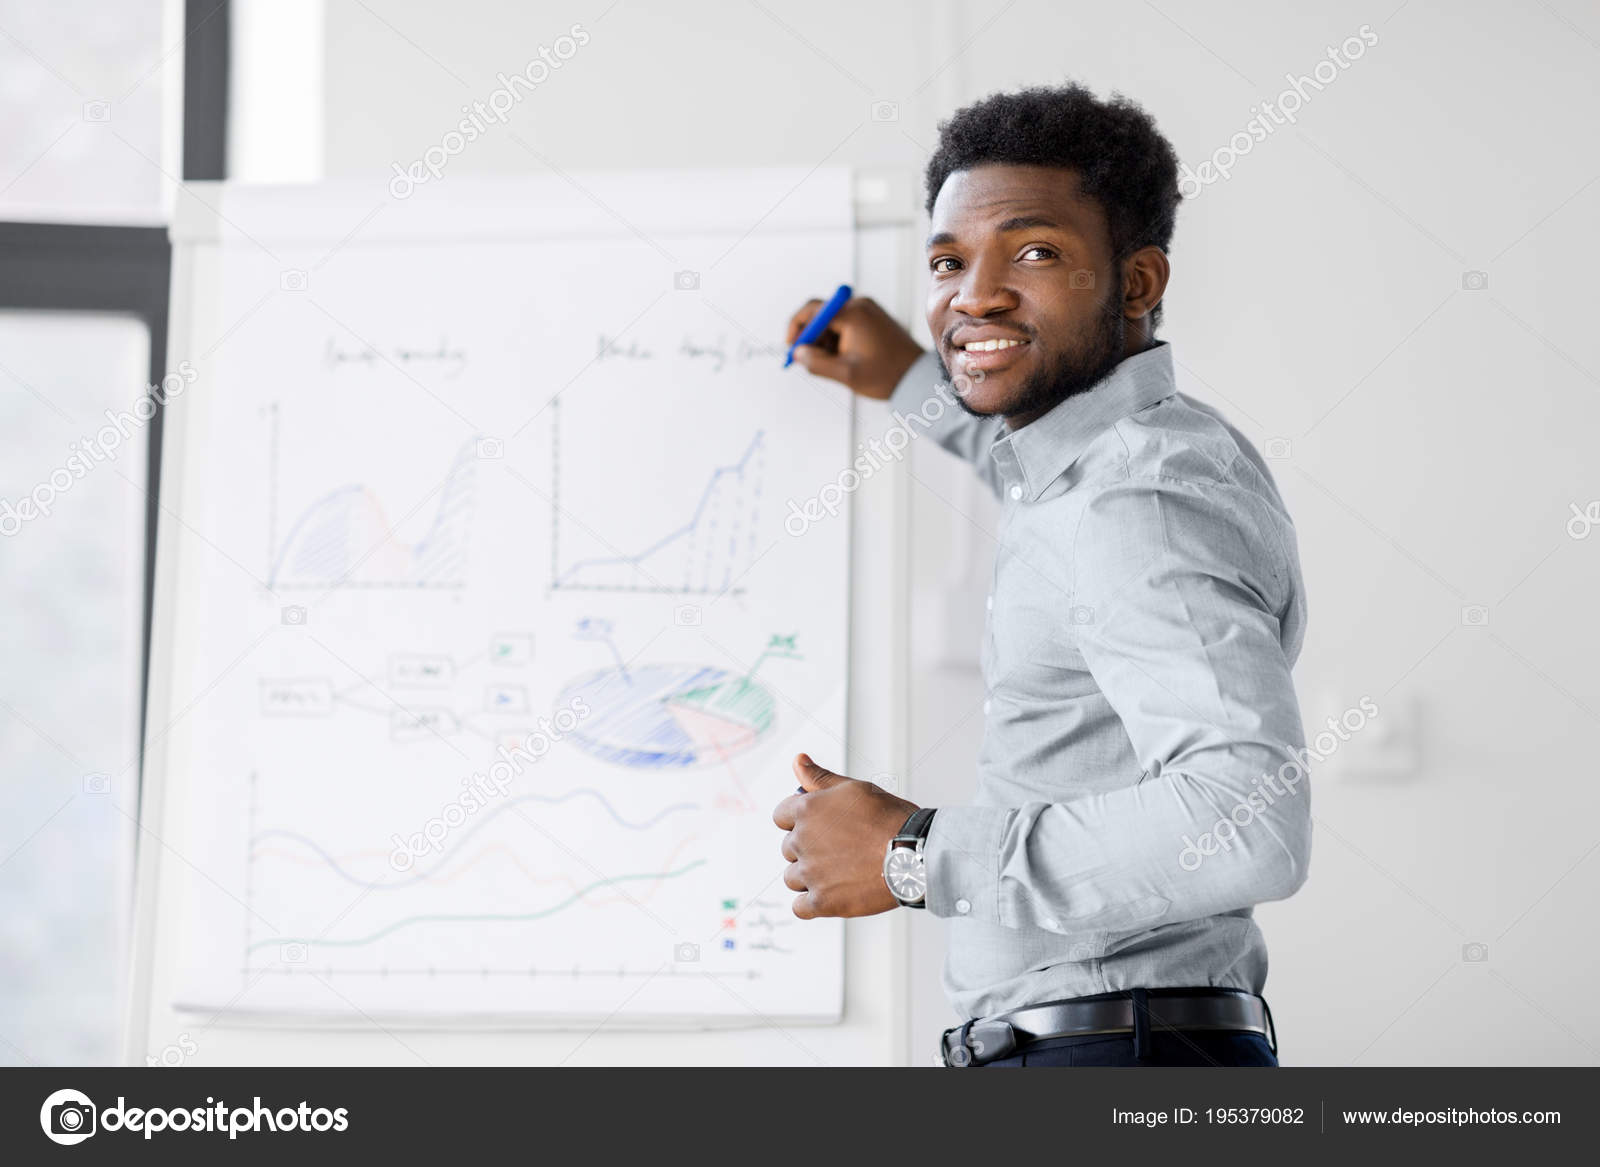 Presentation Flip Charts